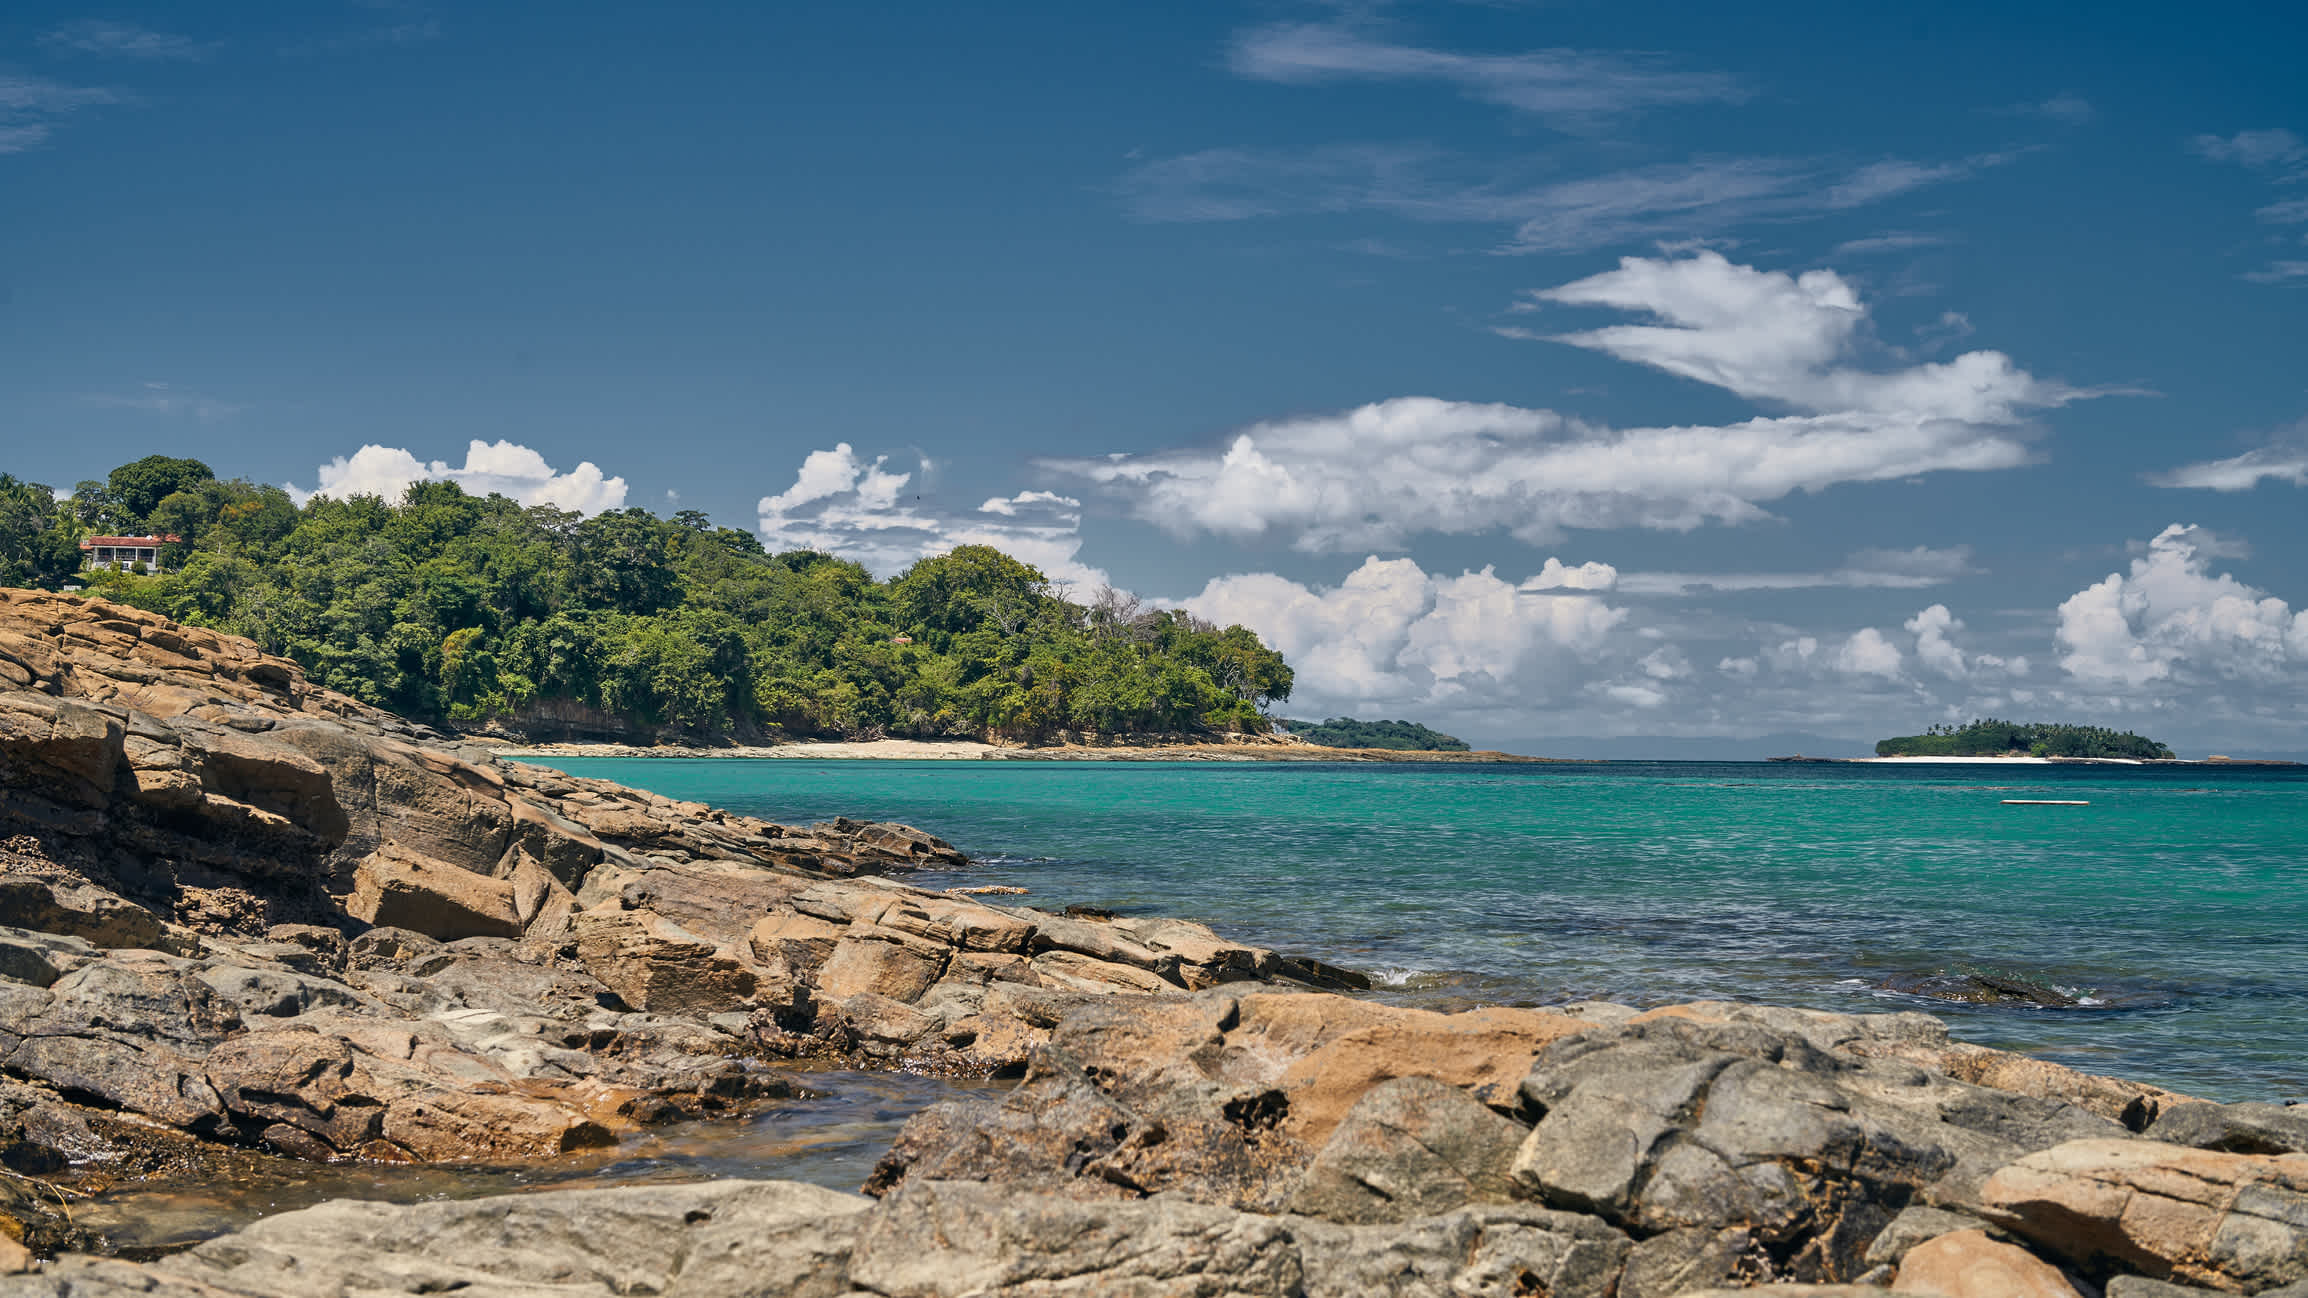 Die Felsen auf Playa Larga, Isla Contadora, Panama. 

